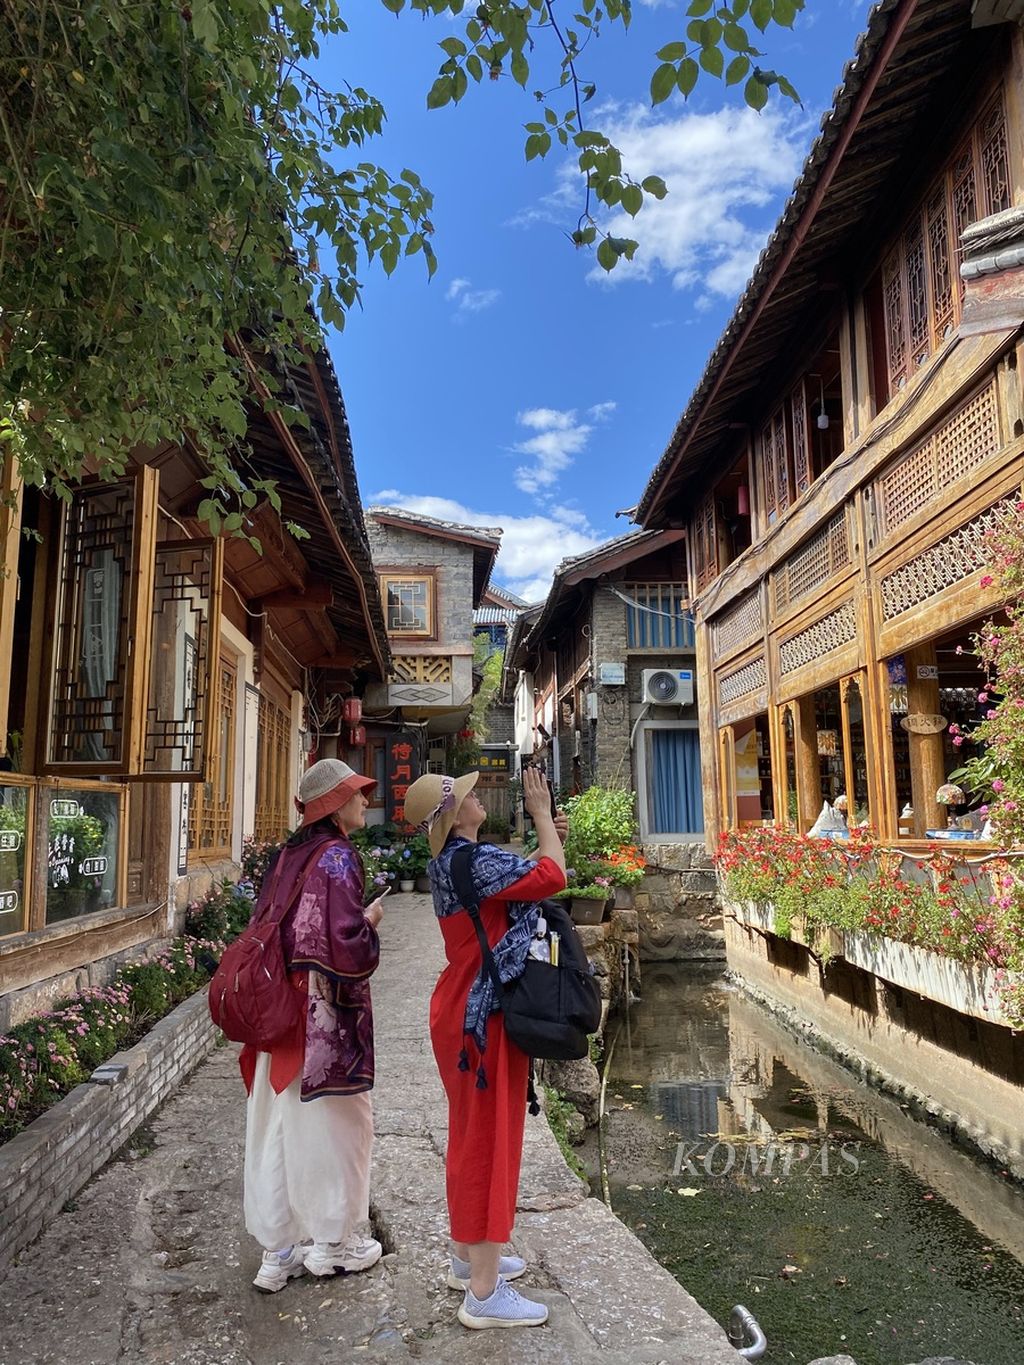 Wisatawan mengamati detail arsitektur kuno di kawasan kota tua Lijiang, China.